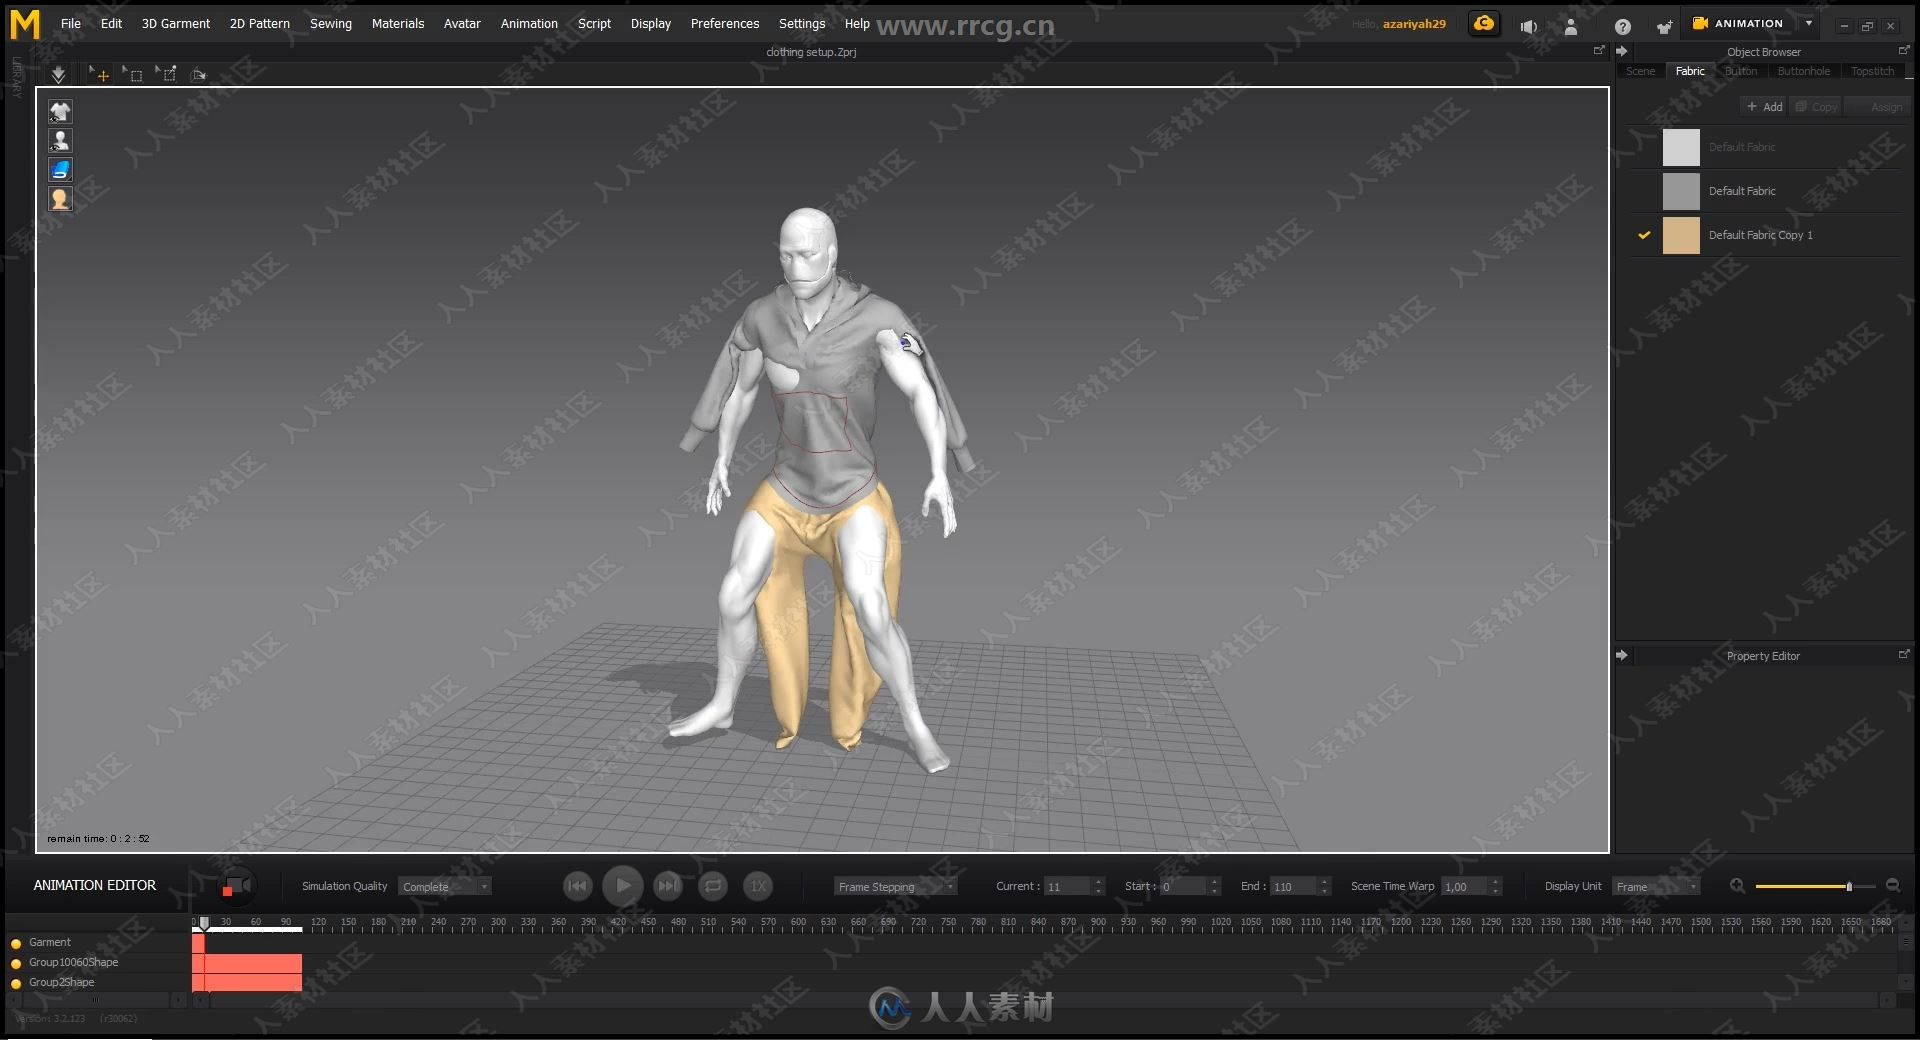 MD与ncloth布料模拟动画工作流程视频教程